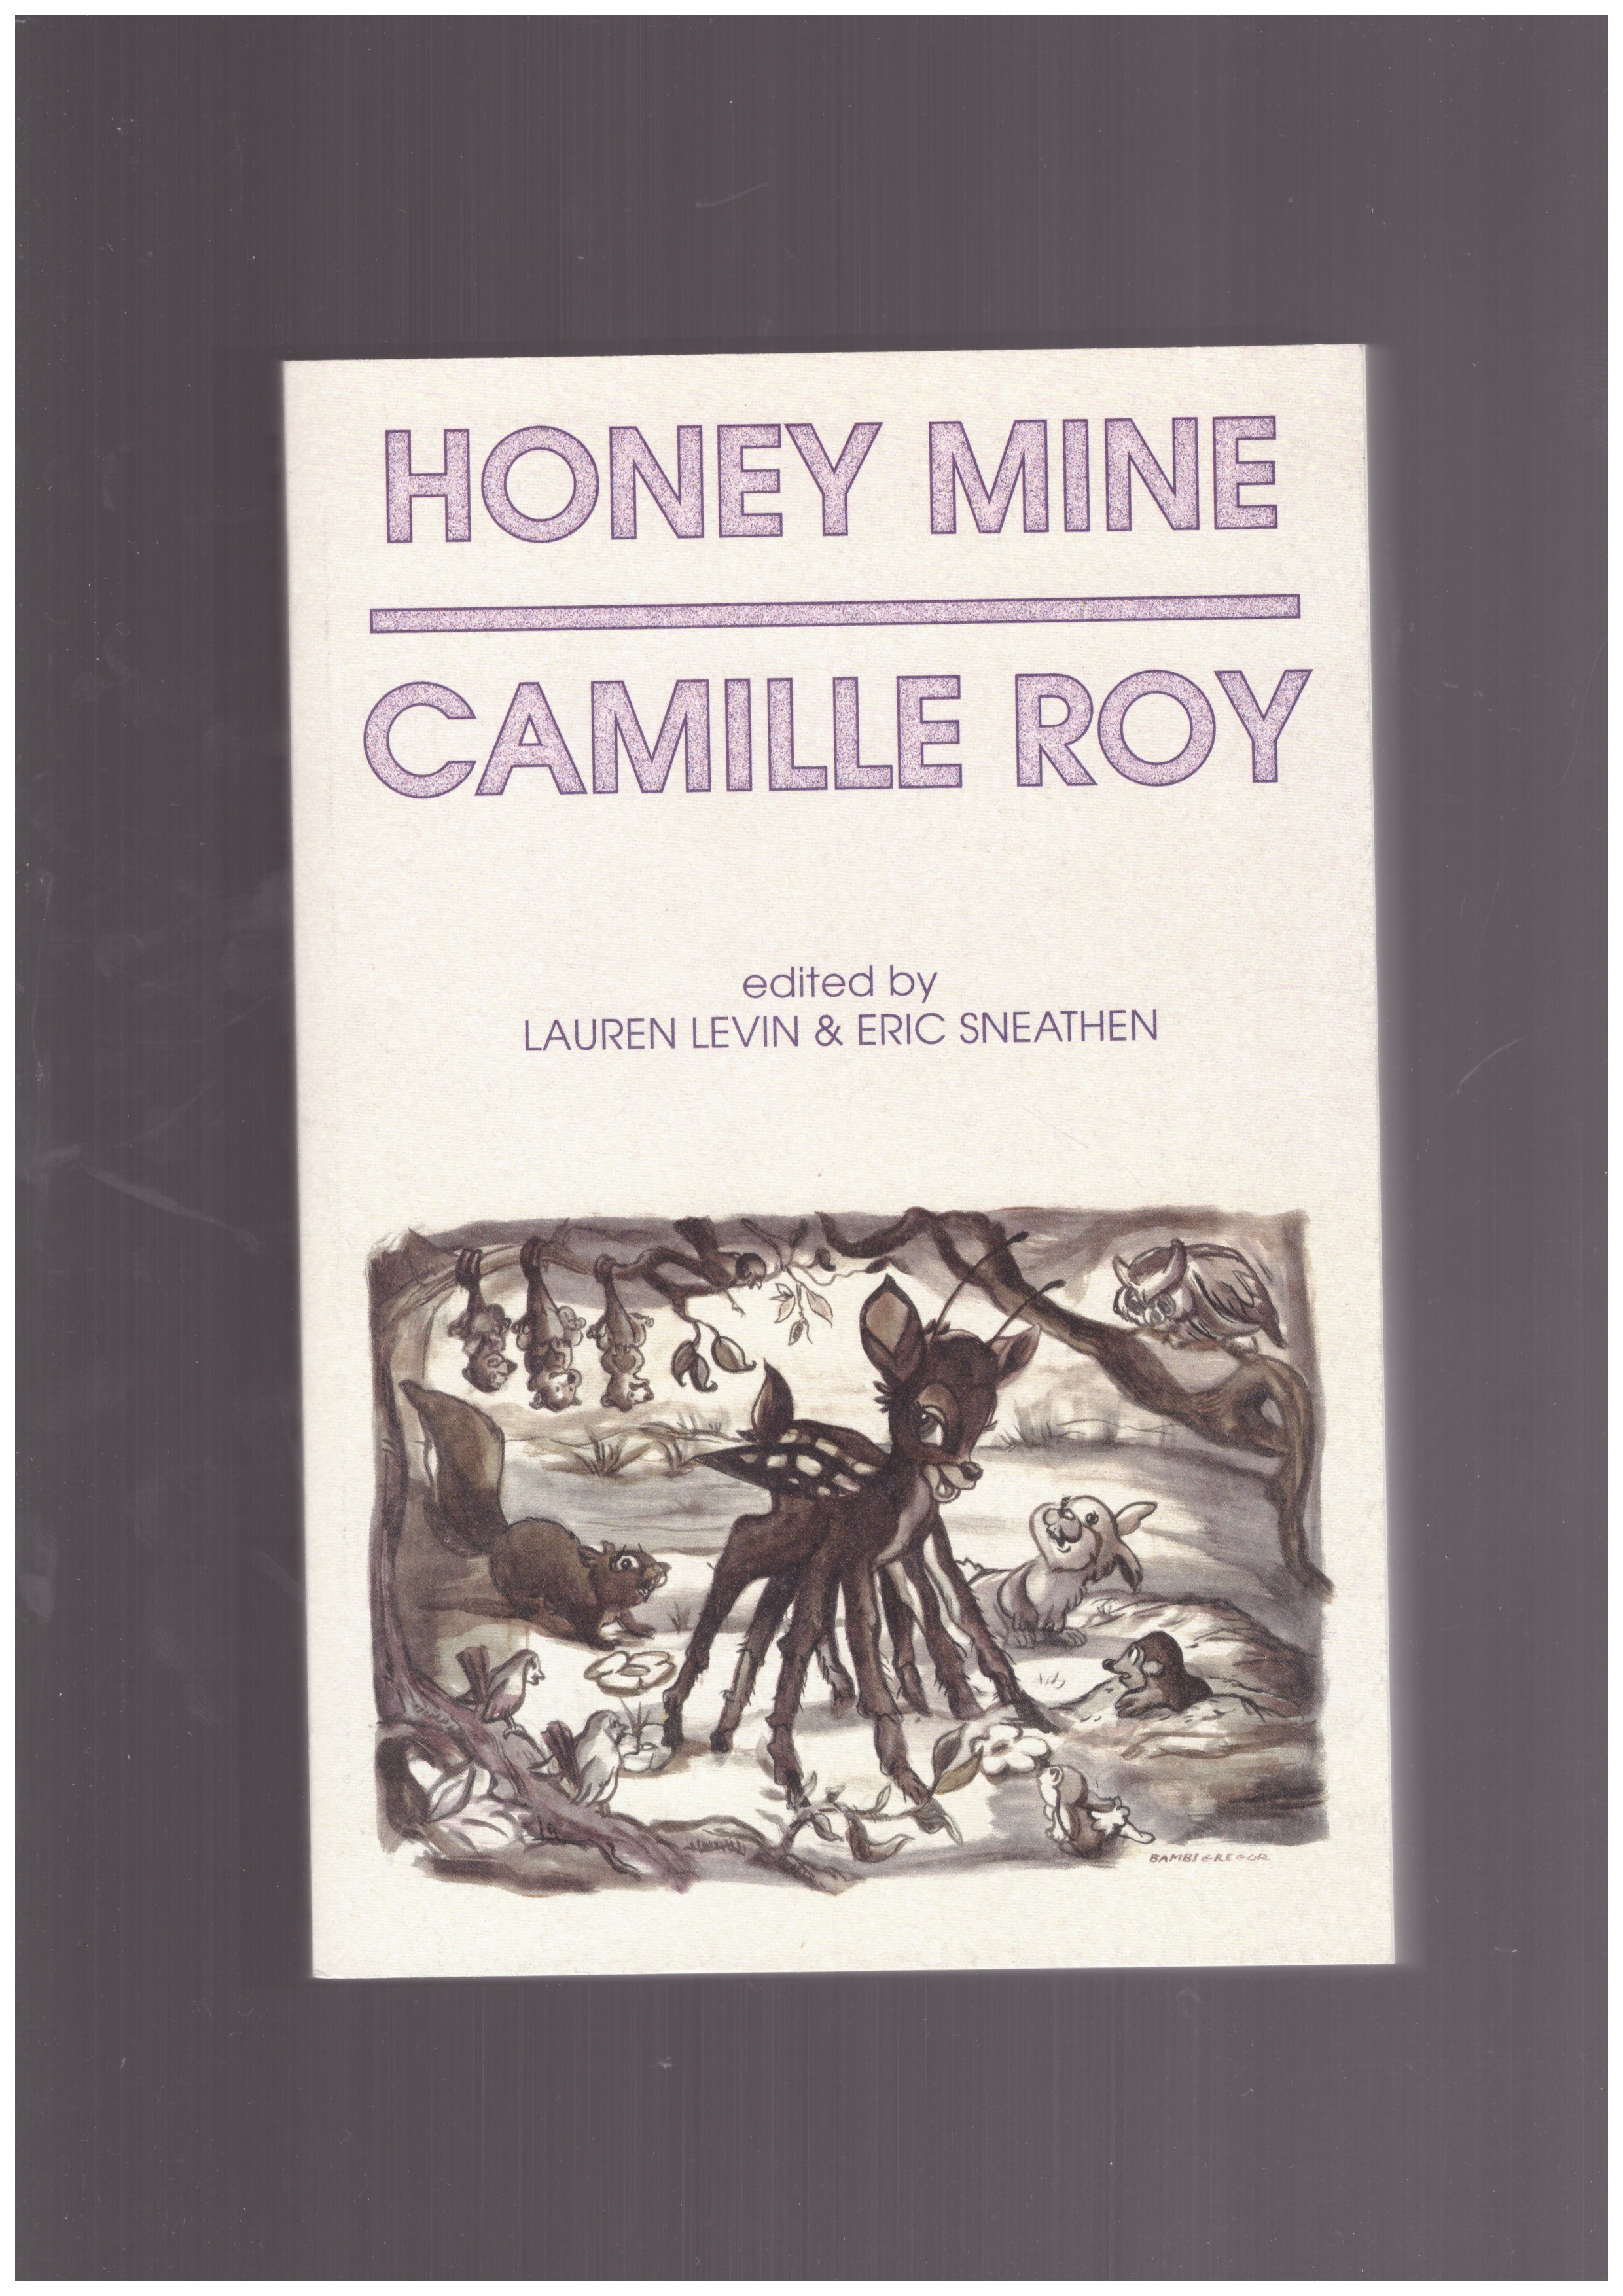 ROY, Camille - Honey Mine